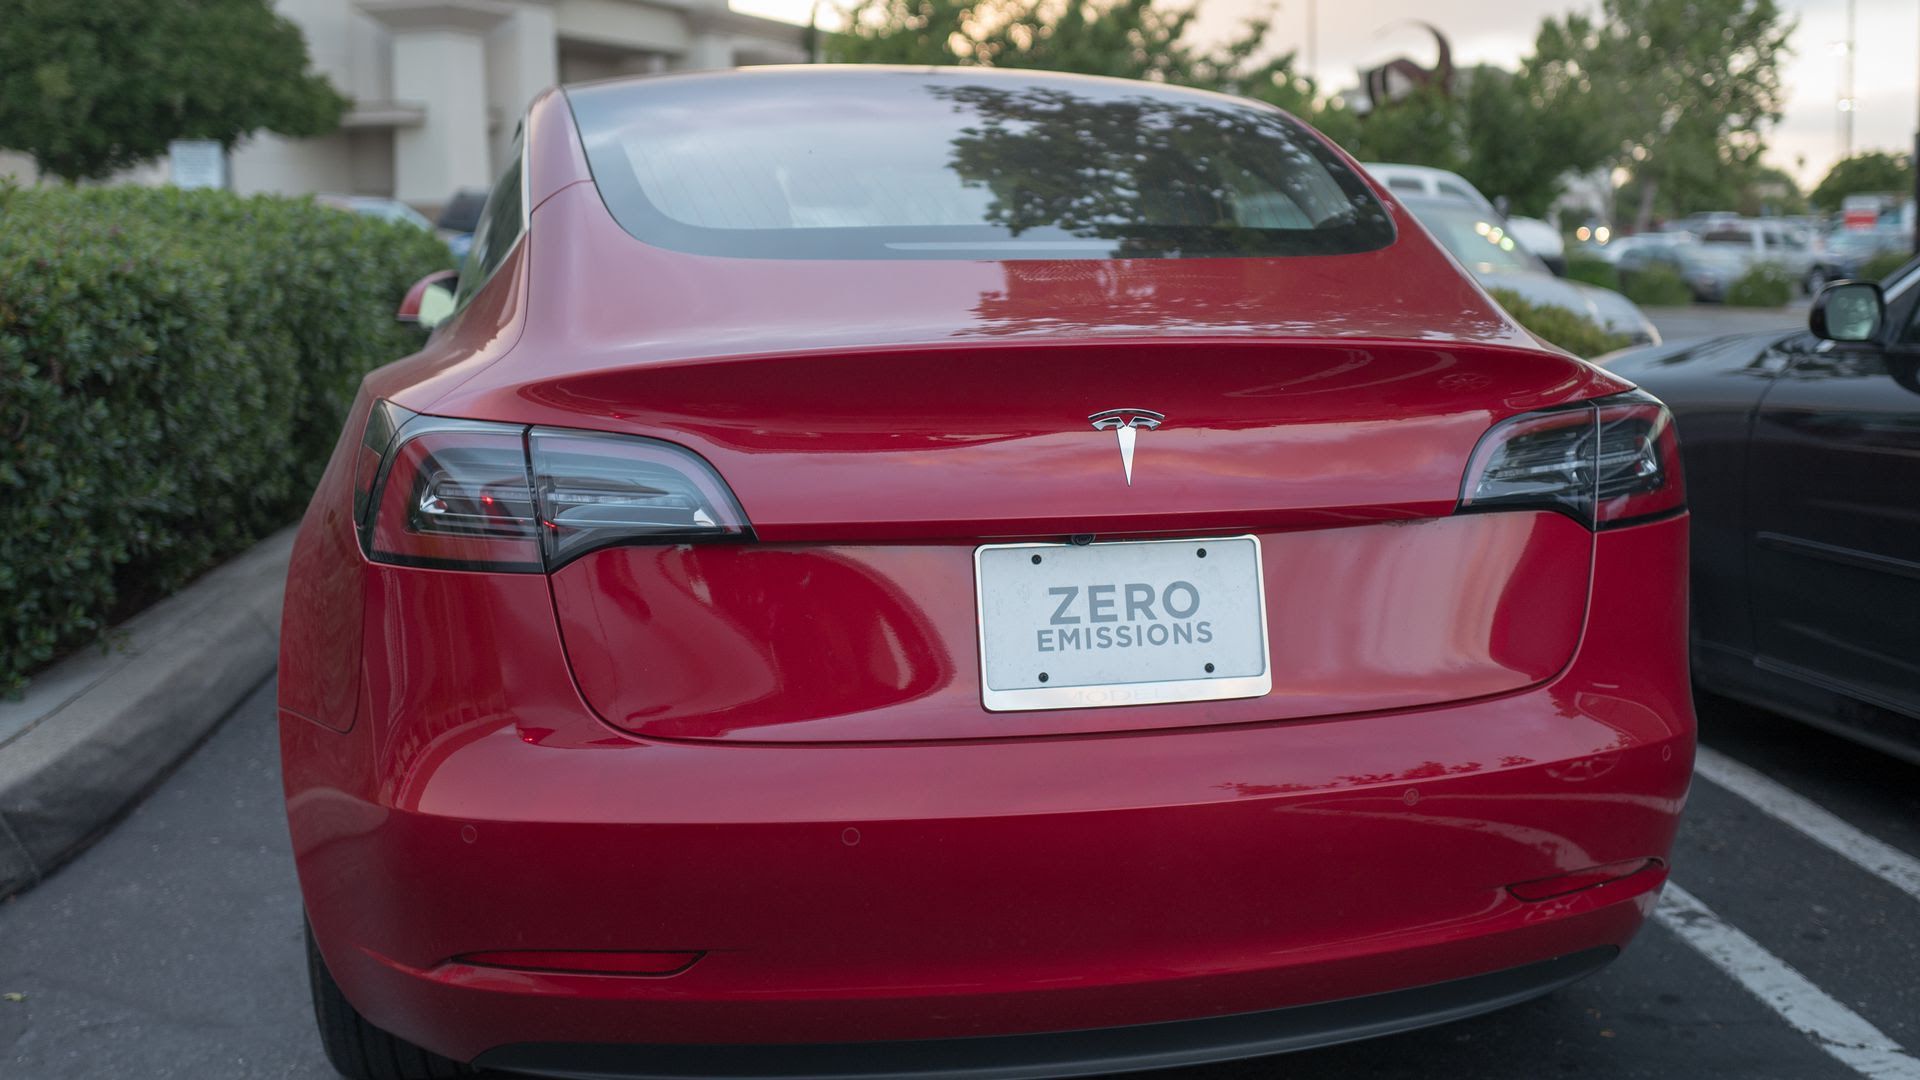 Tesla Model 3 license plate reads "Zero Emissions"